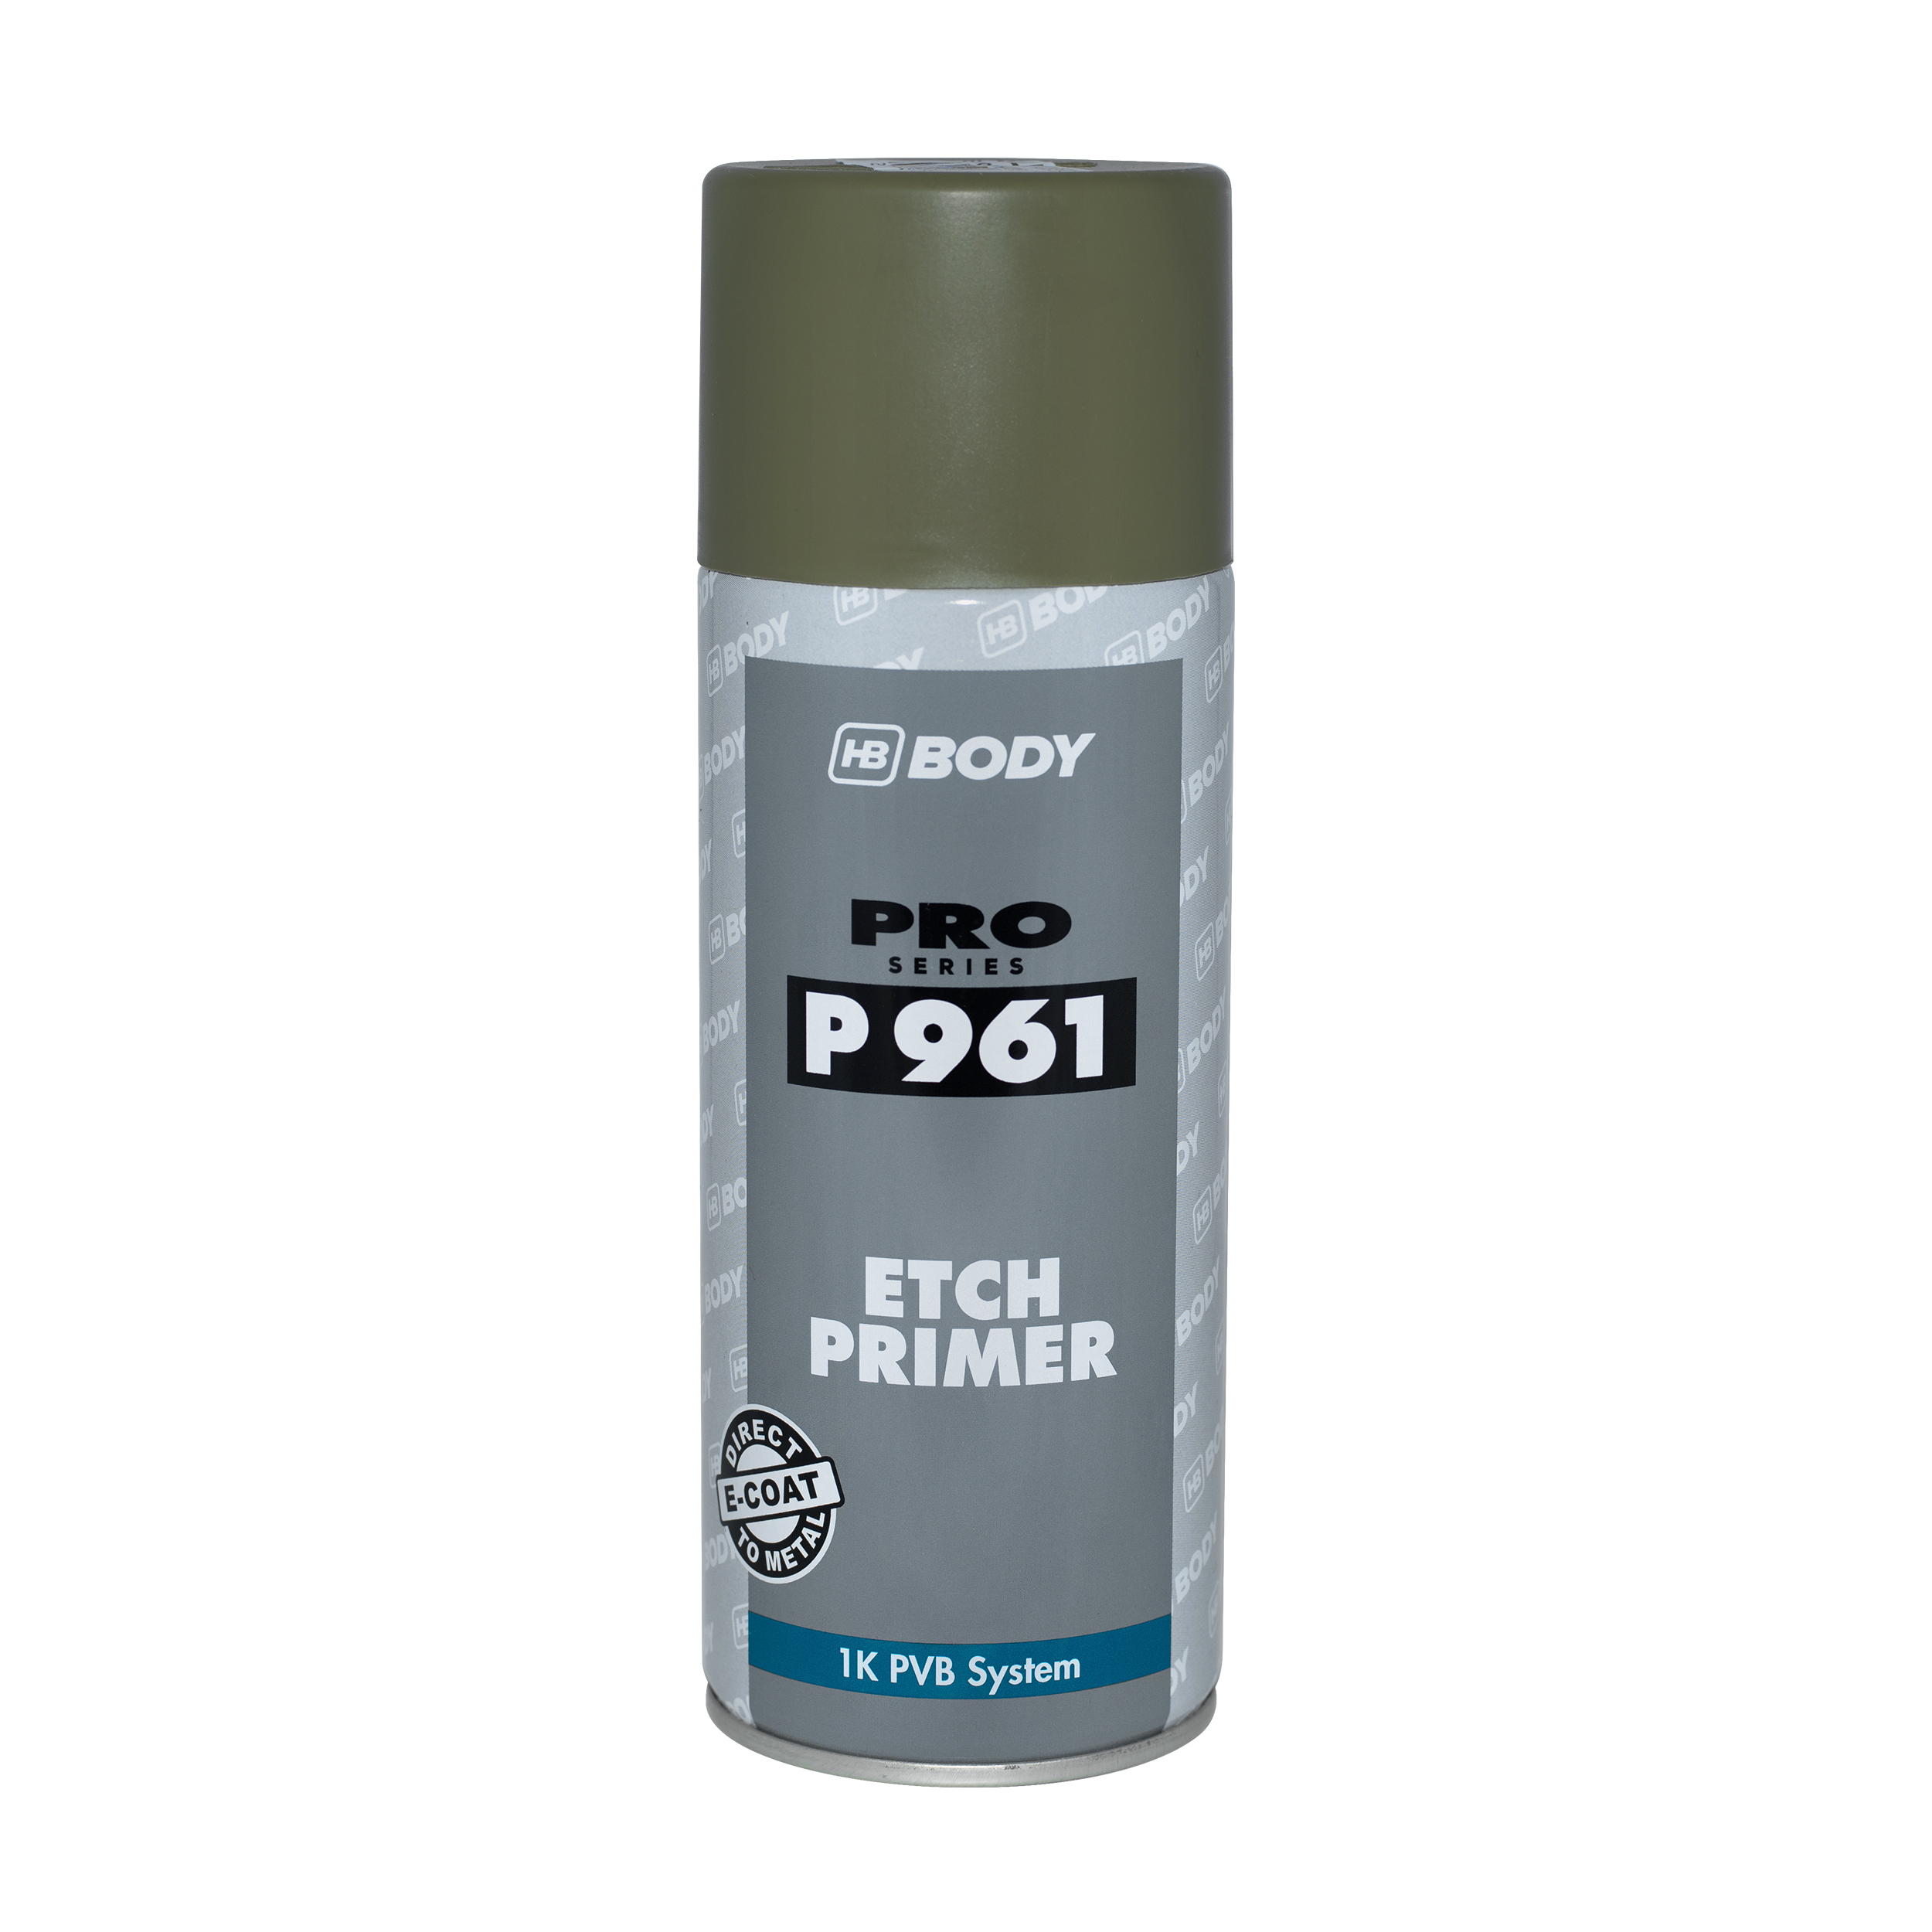 Body Spray P961 Etch primer протравлюючий грунт світло-зелений 400мл